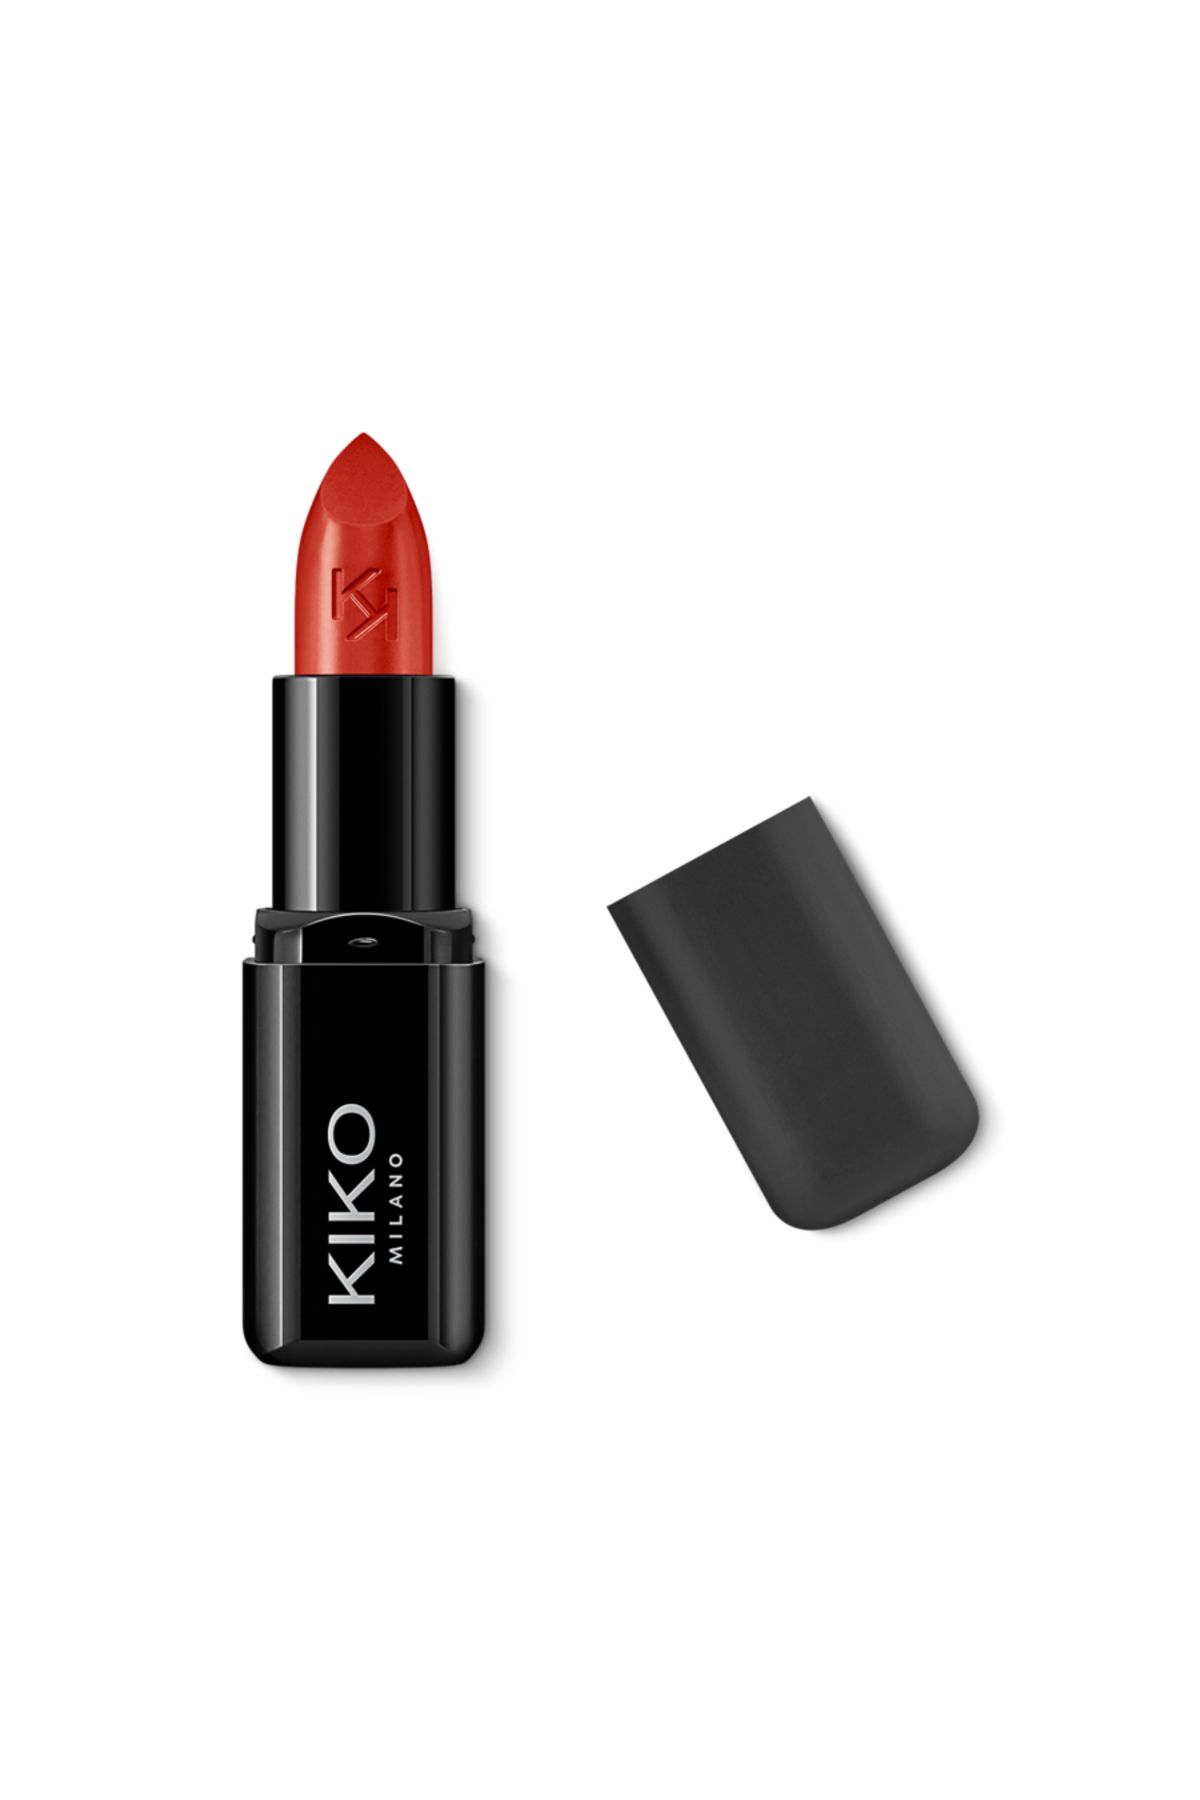 KIKO RUJ - Smart Fusion Lipstick - 460 Orange Red